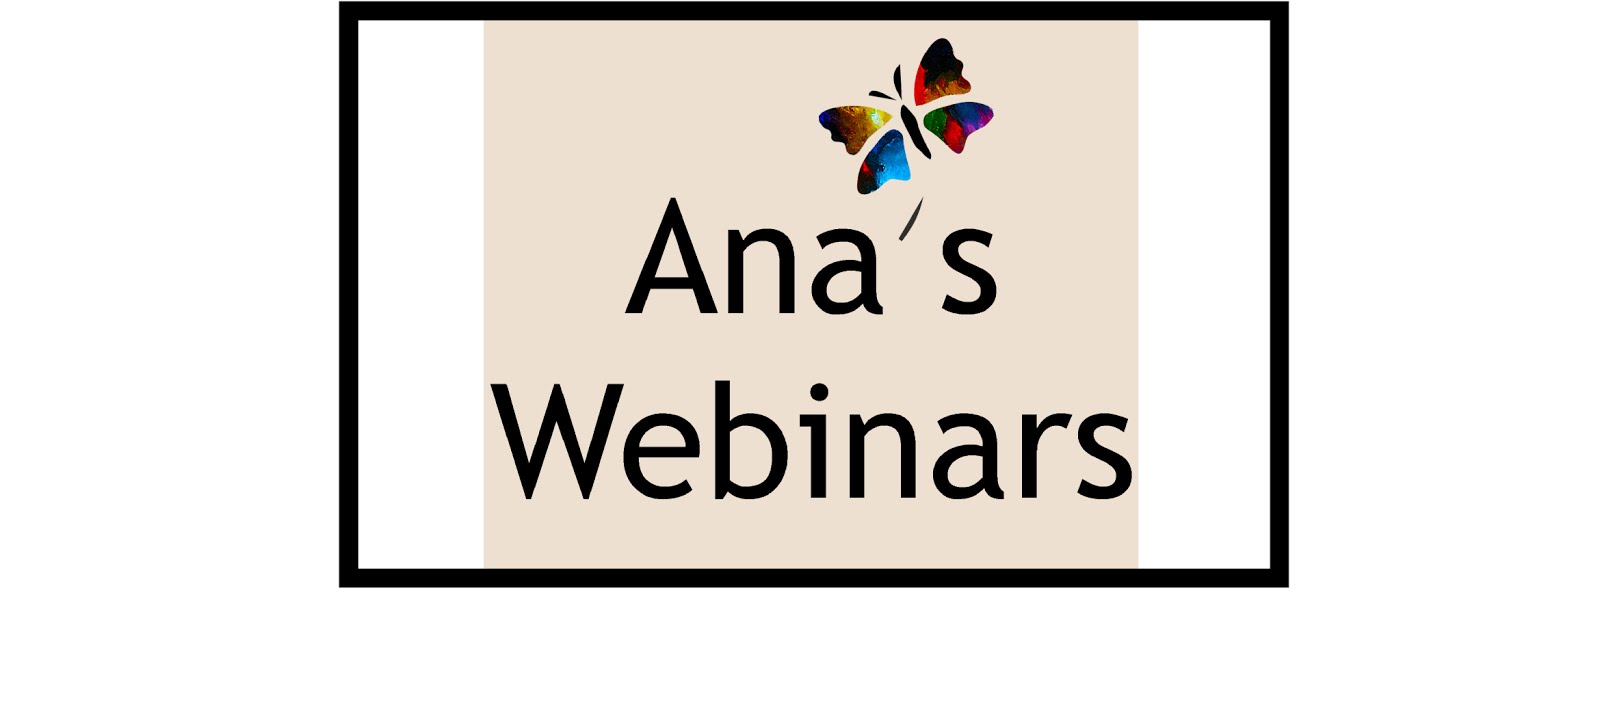 Ana's Webinars